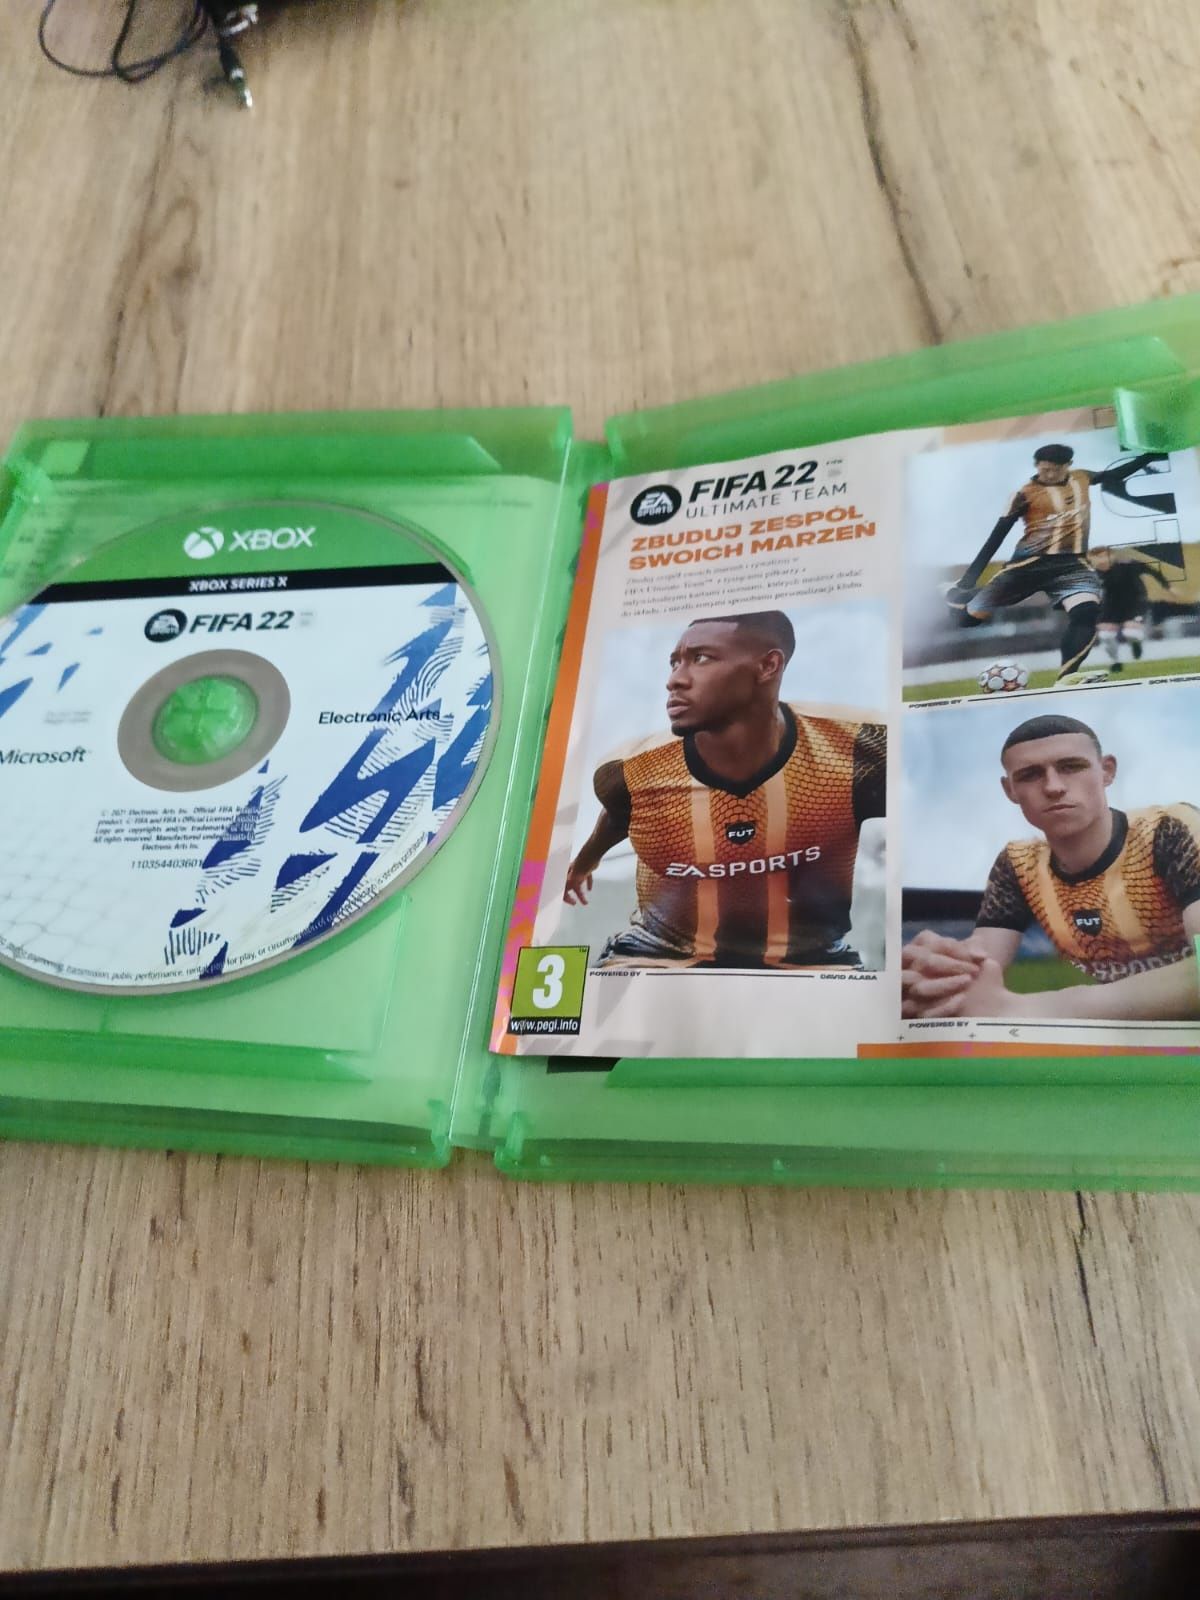 FIFA 22 Xbox one/series x